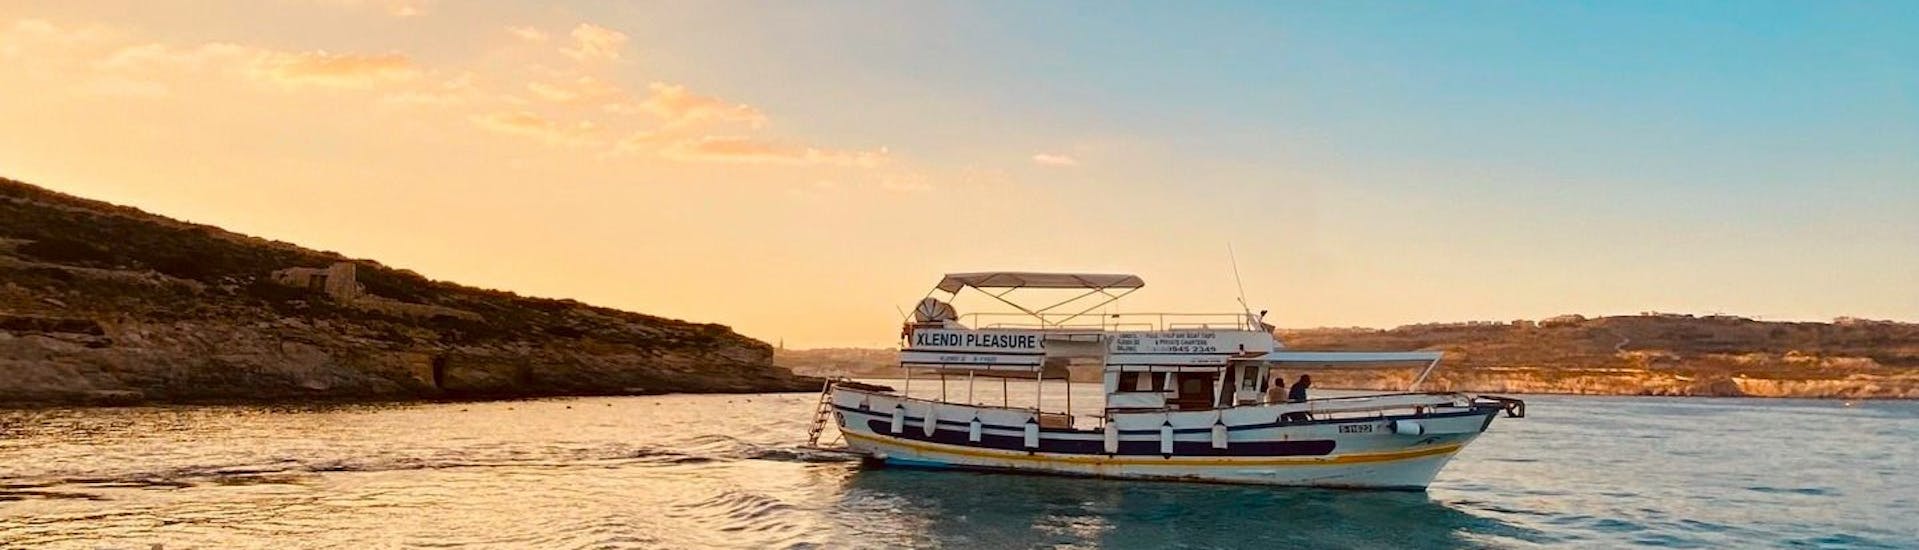 Paseo en barco de Mgarr (Gozo) a Comino  & baño en el mar con Xlendi Pleasure Cruises.